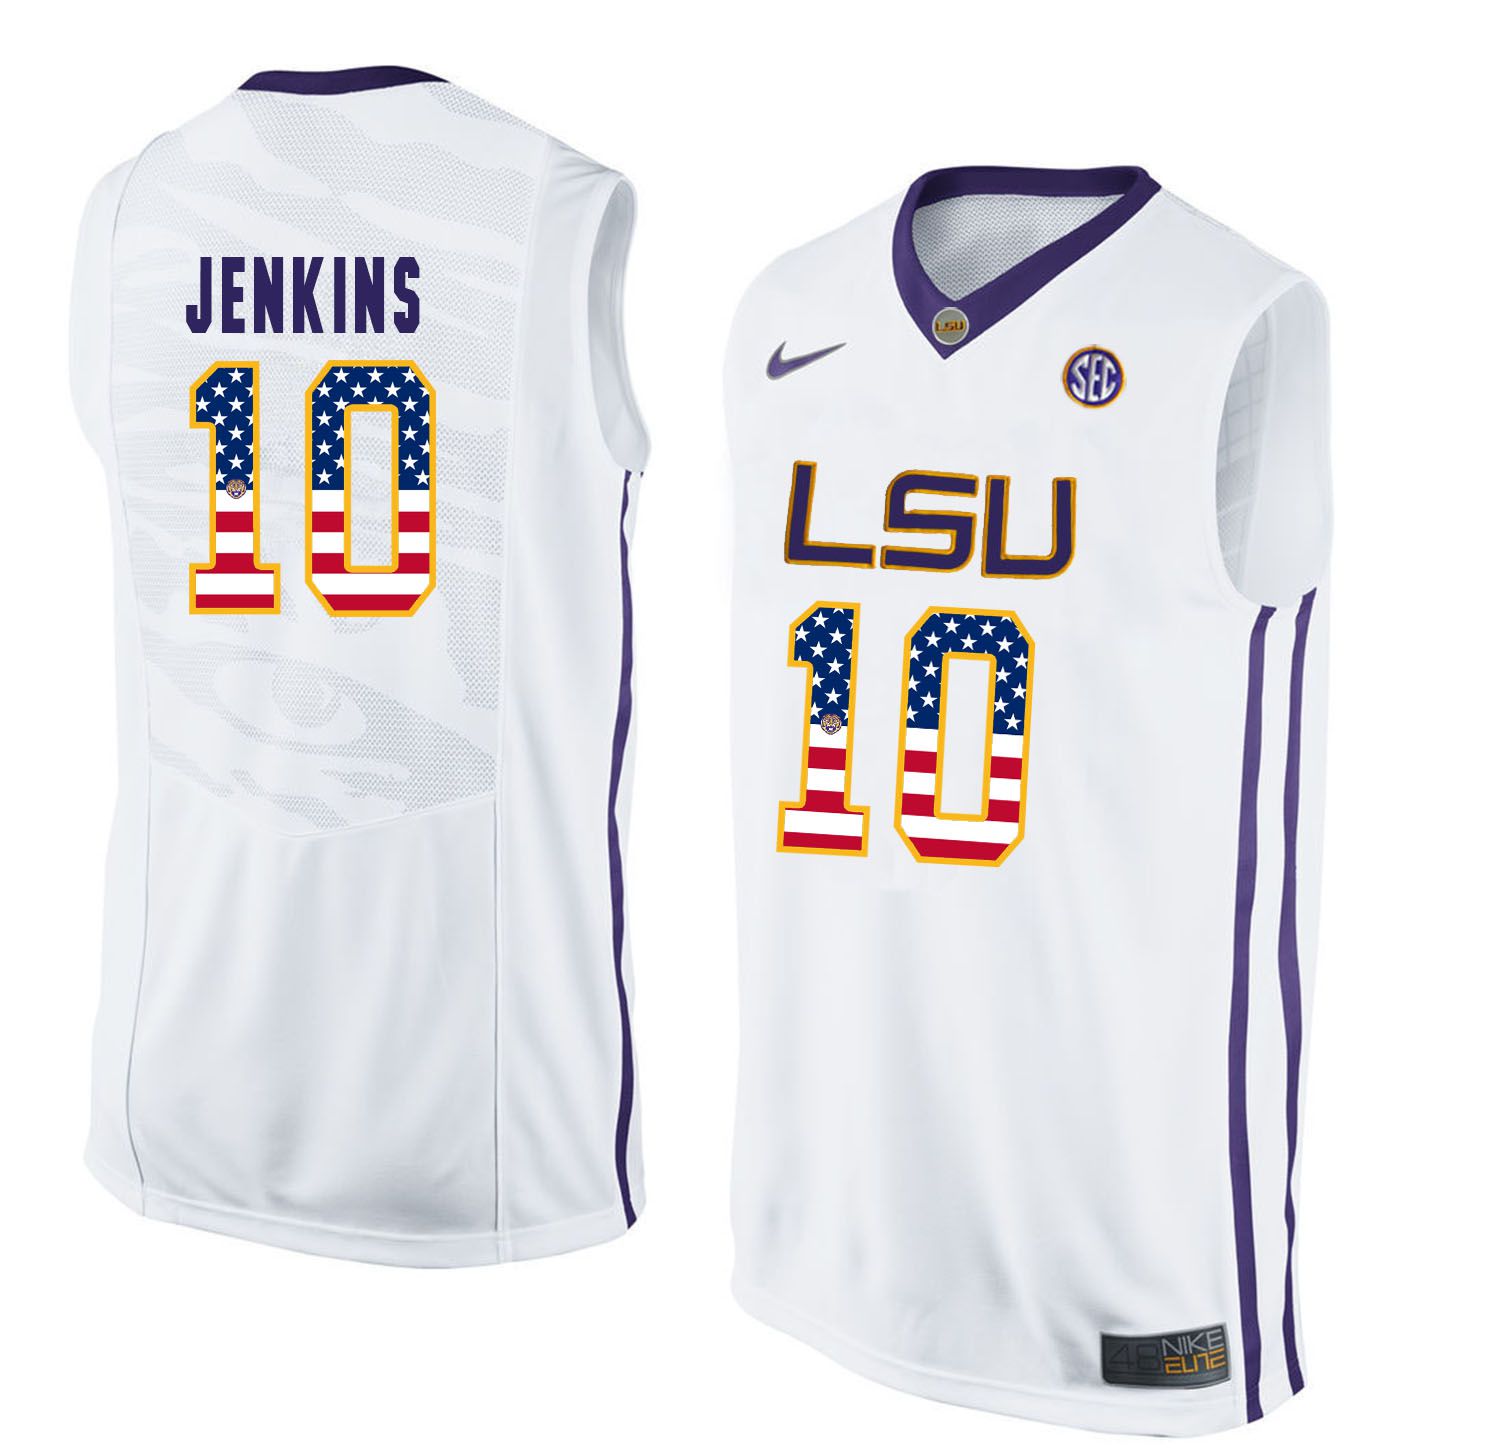 Men LSU Tigers 10 Jenkins White Flag Customized NCAA Jerseys